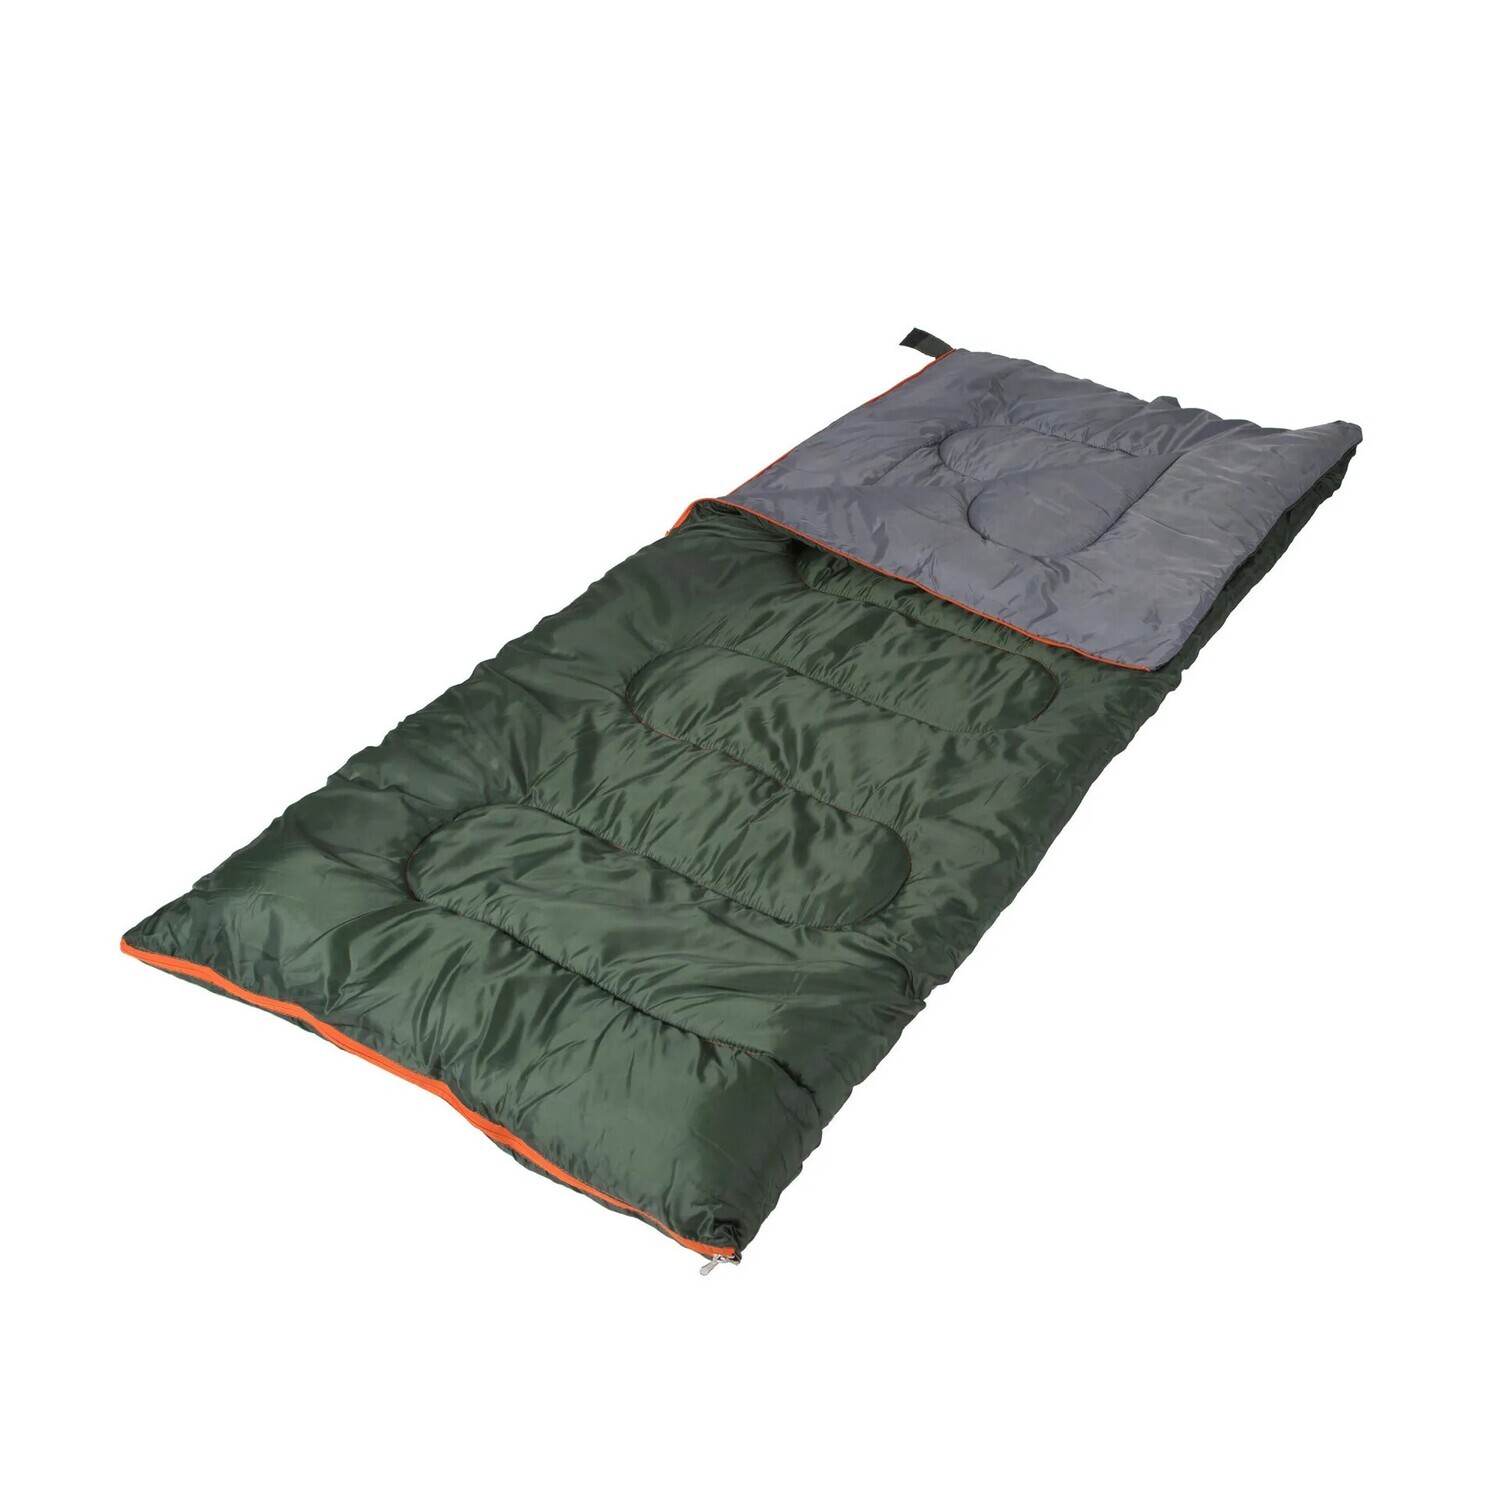 Stansport Scout Adult Sleeping Bag 50F/10c (75"x33") 3lb Dark Green